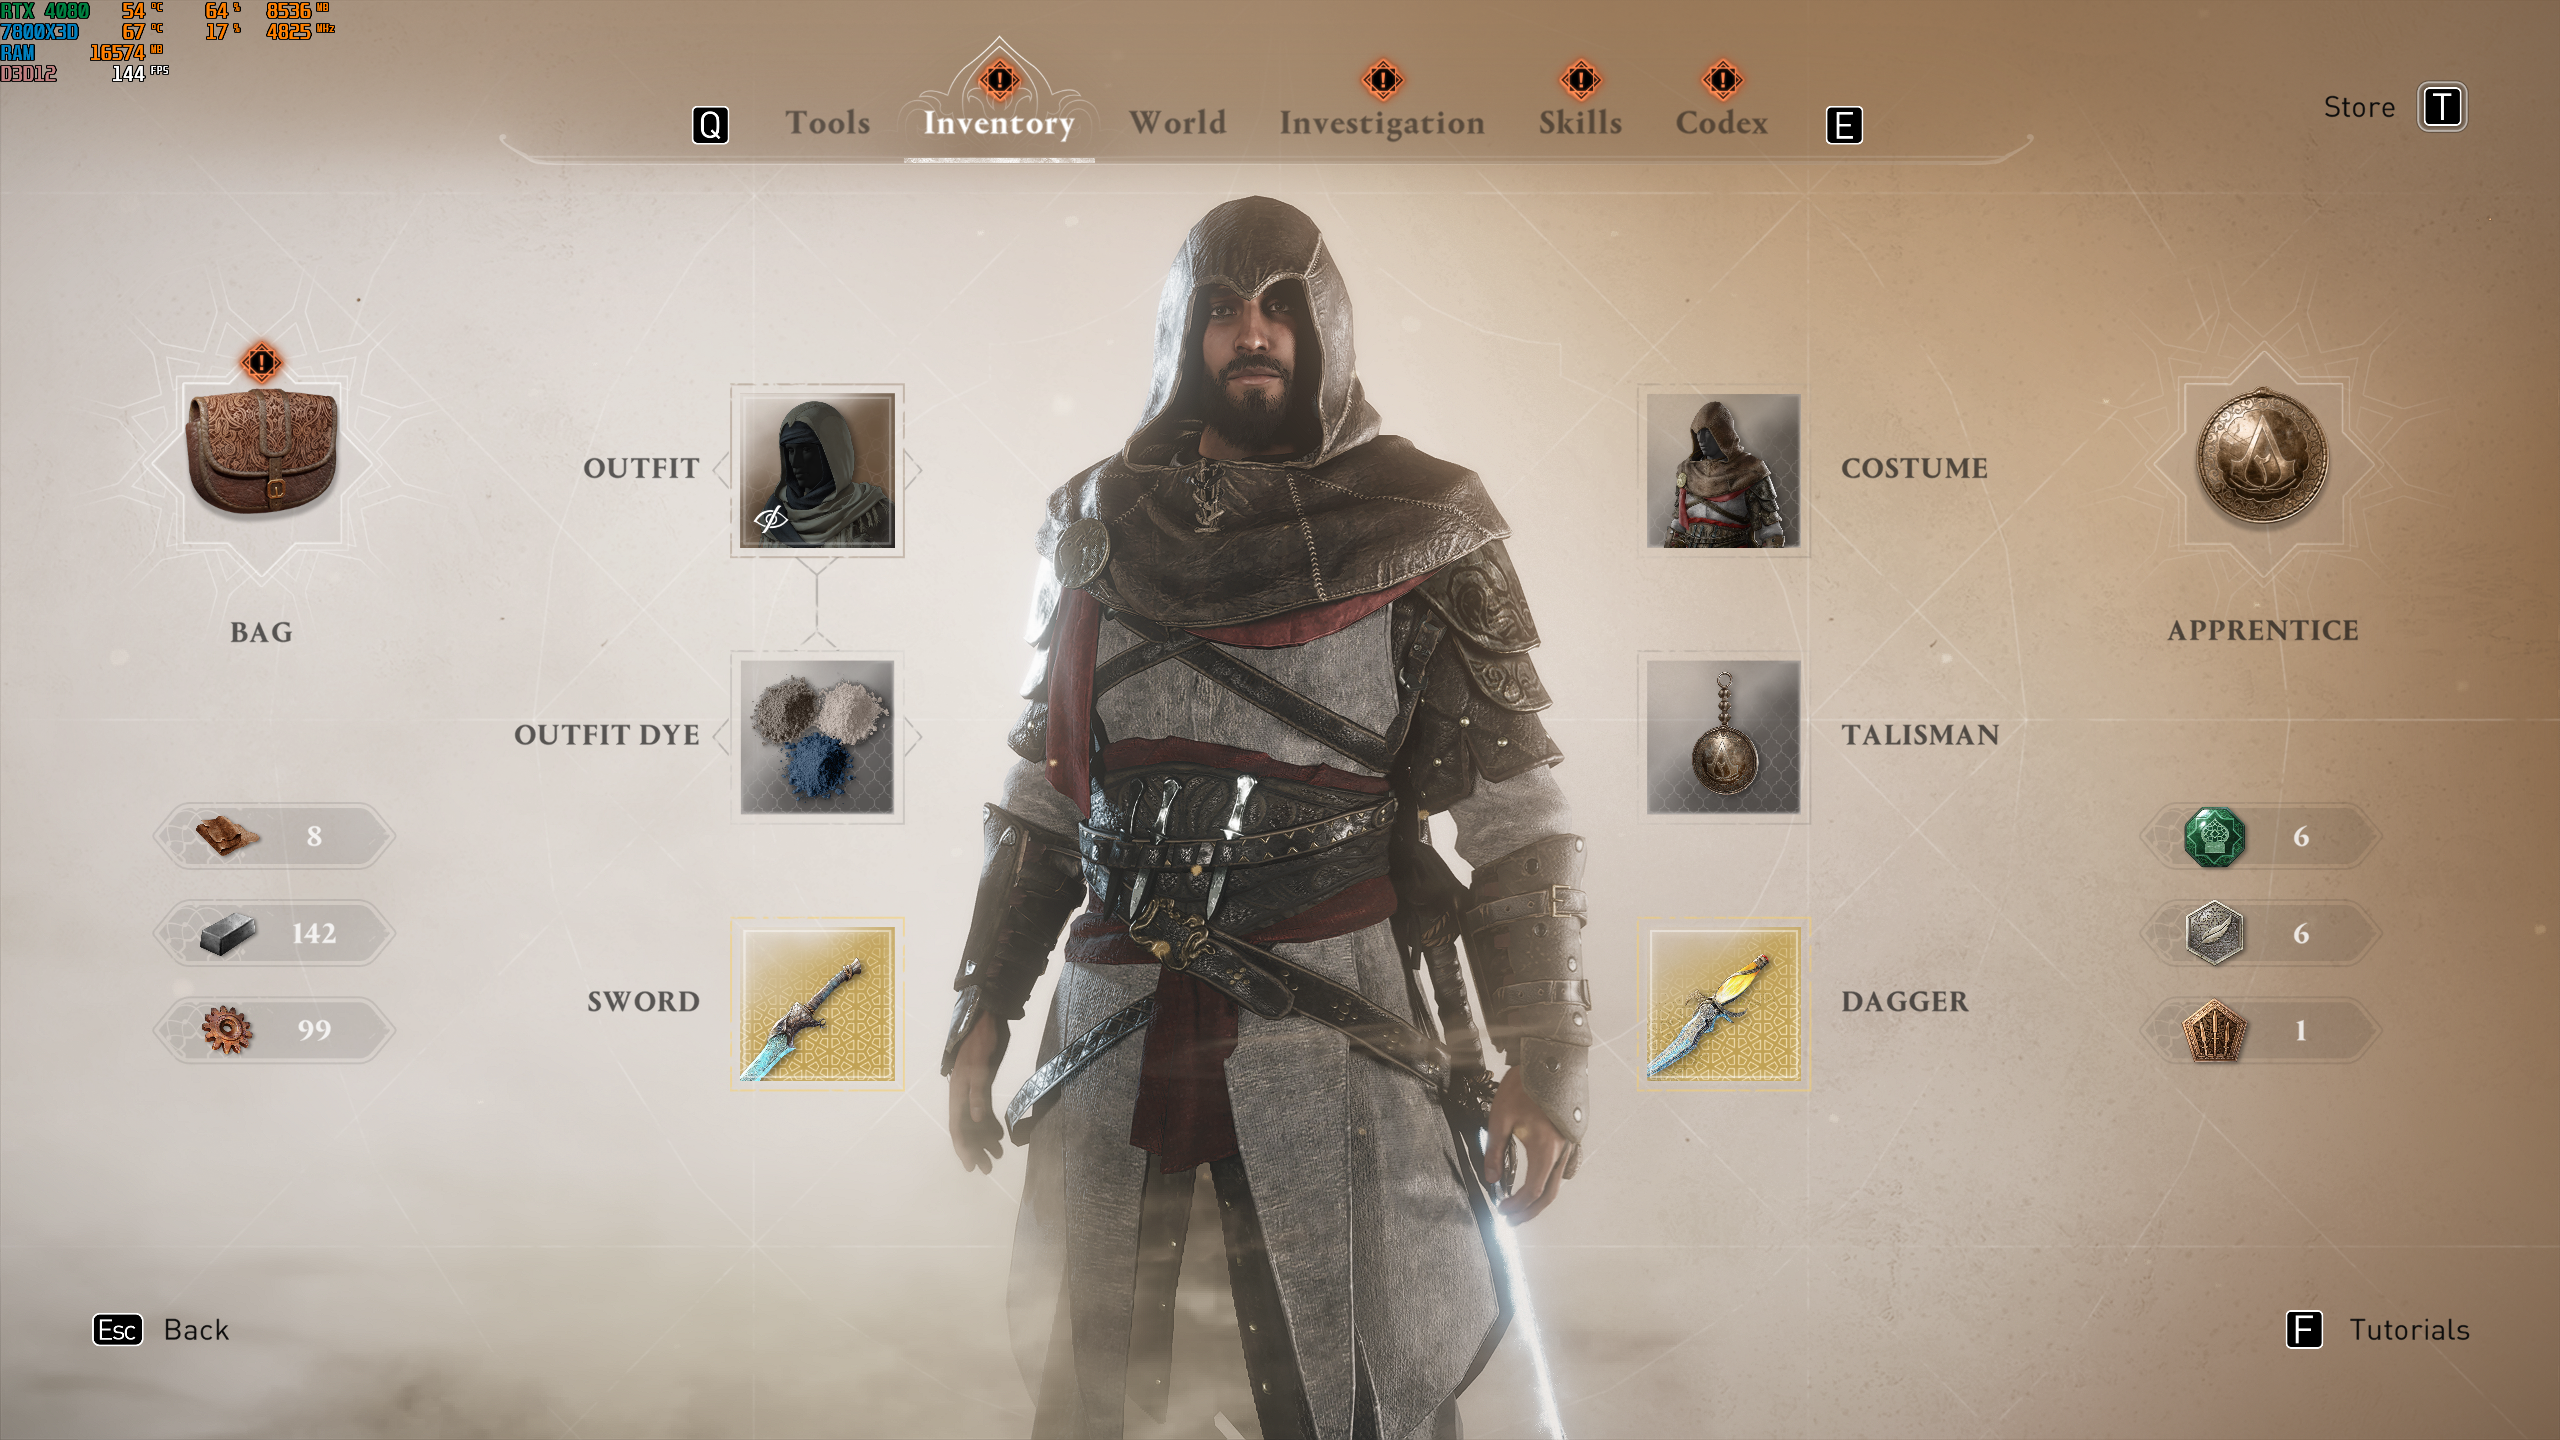 Assassin's Creed Origins: The Hidden Ones PC Review